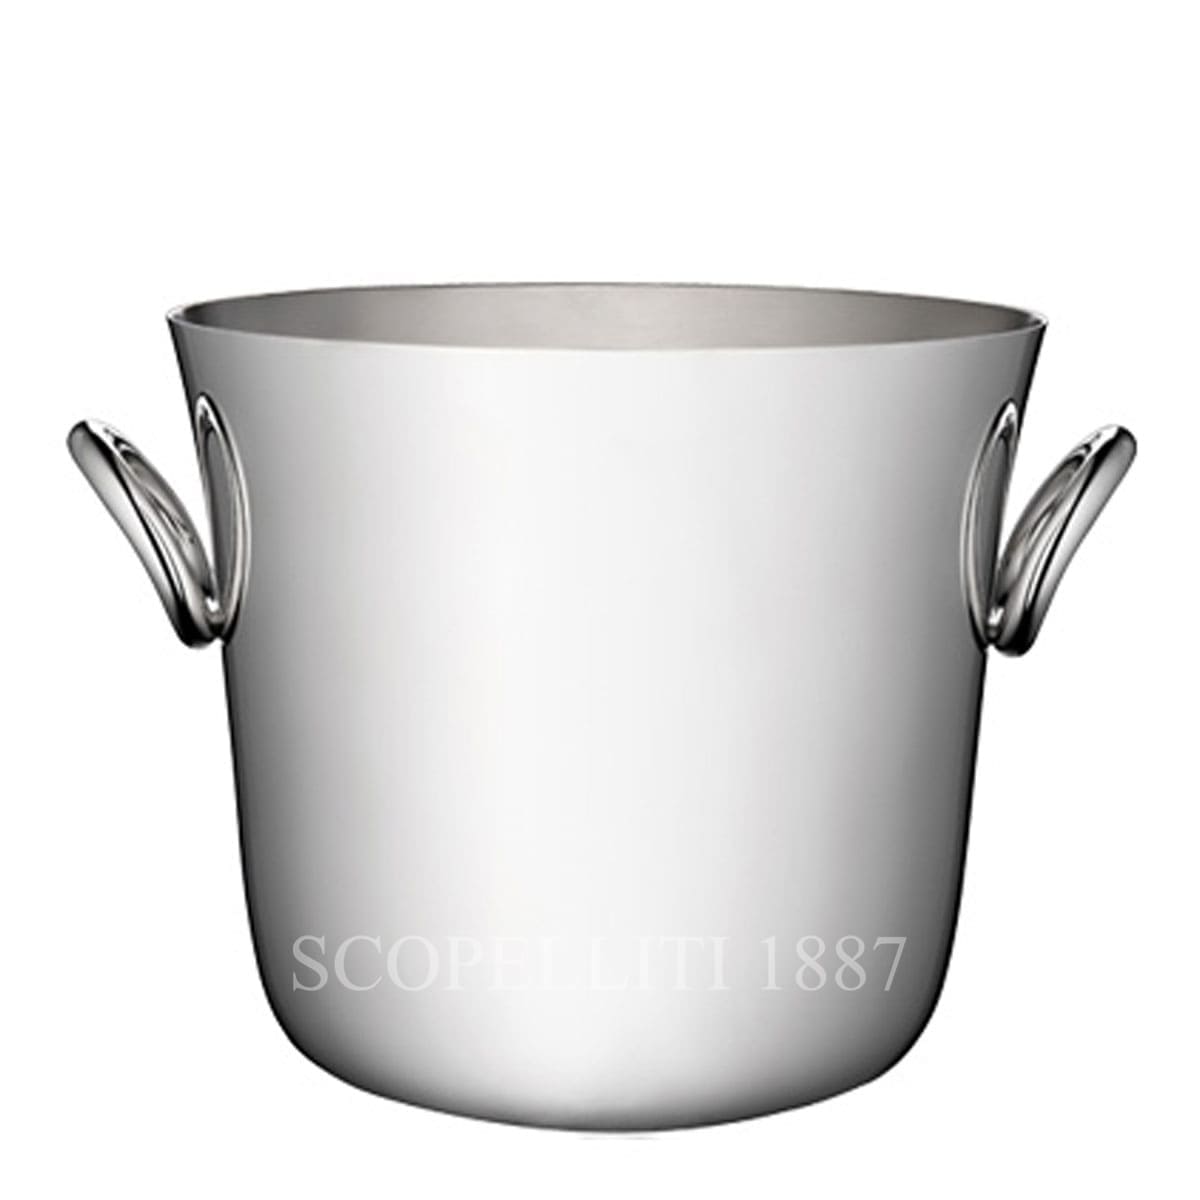 christofle silver plated vertigo ice bucket